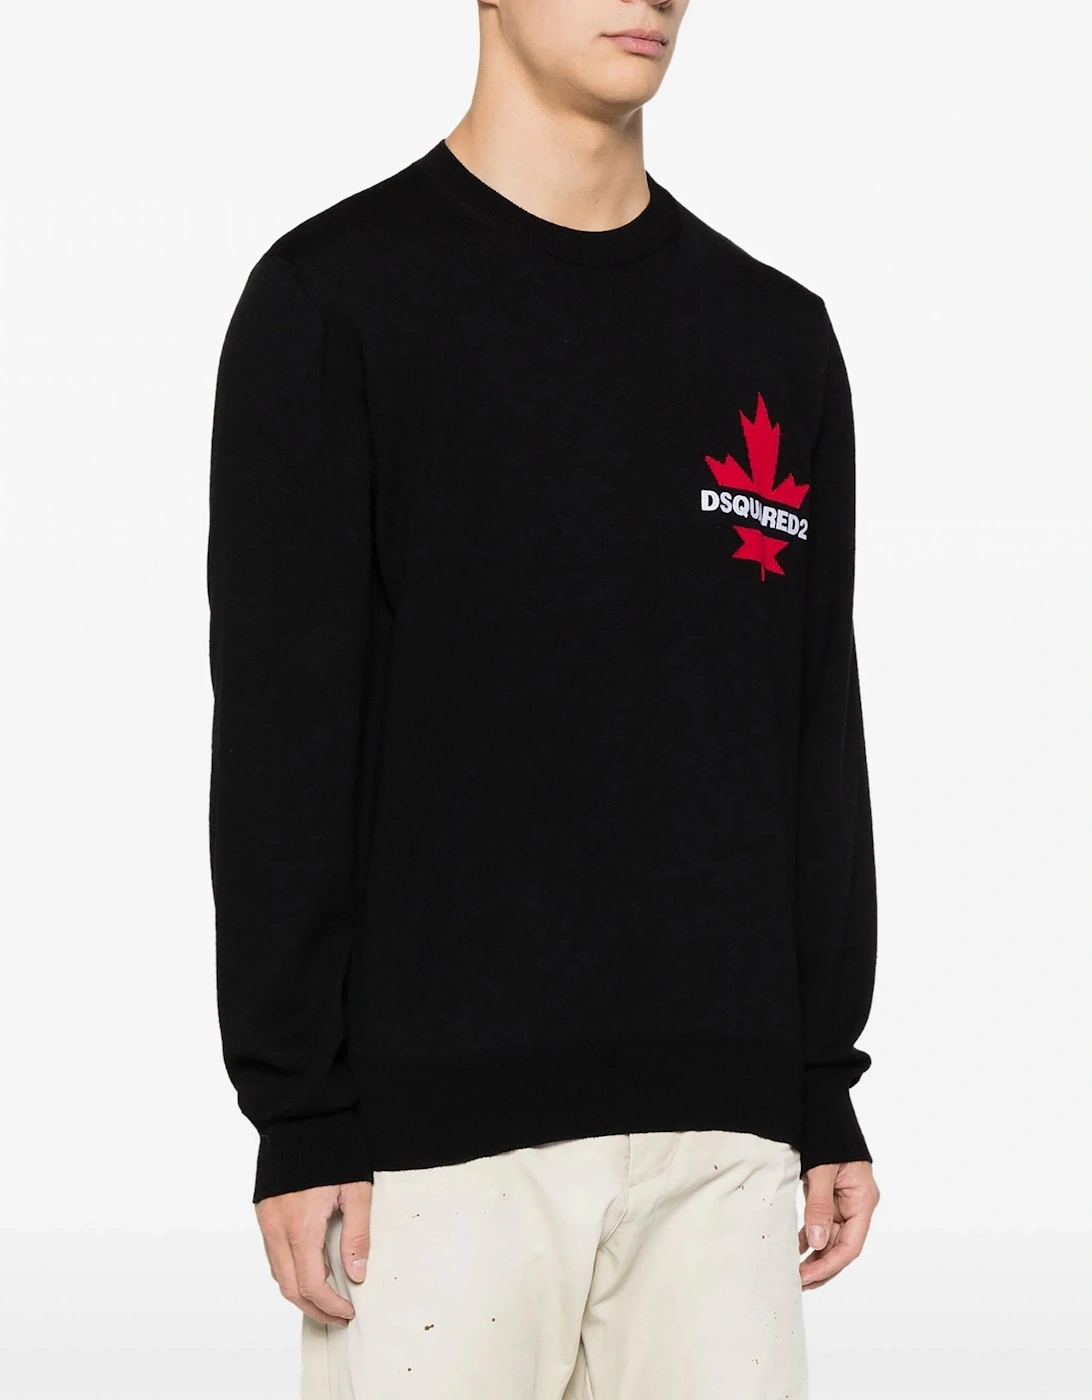 Woven Maple Leaf Sweater Black